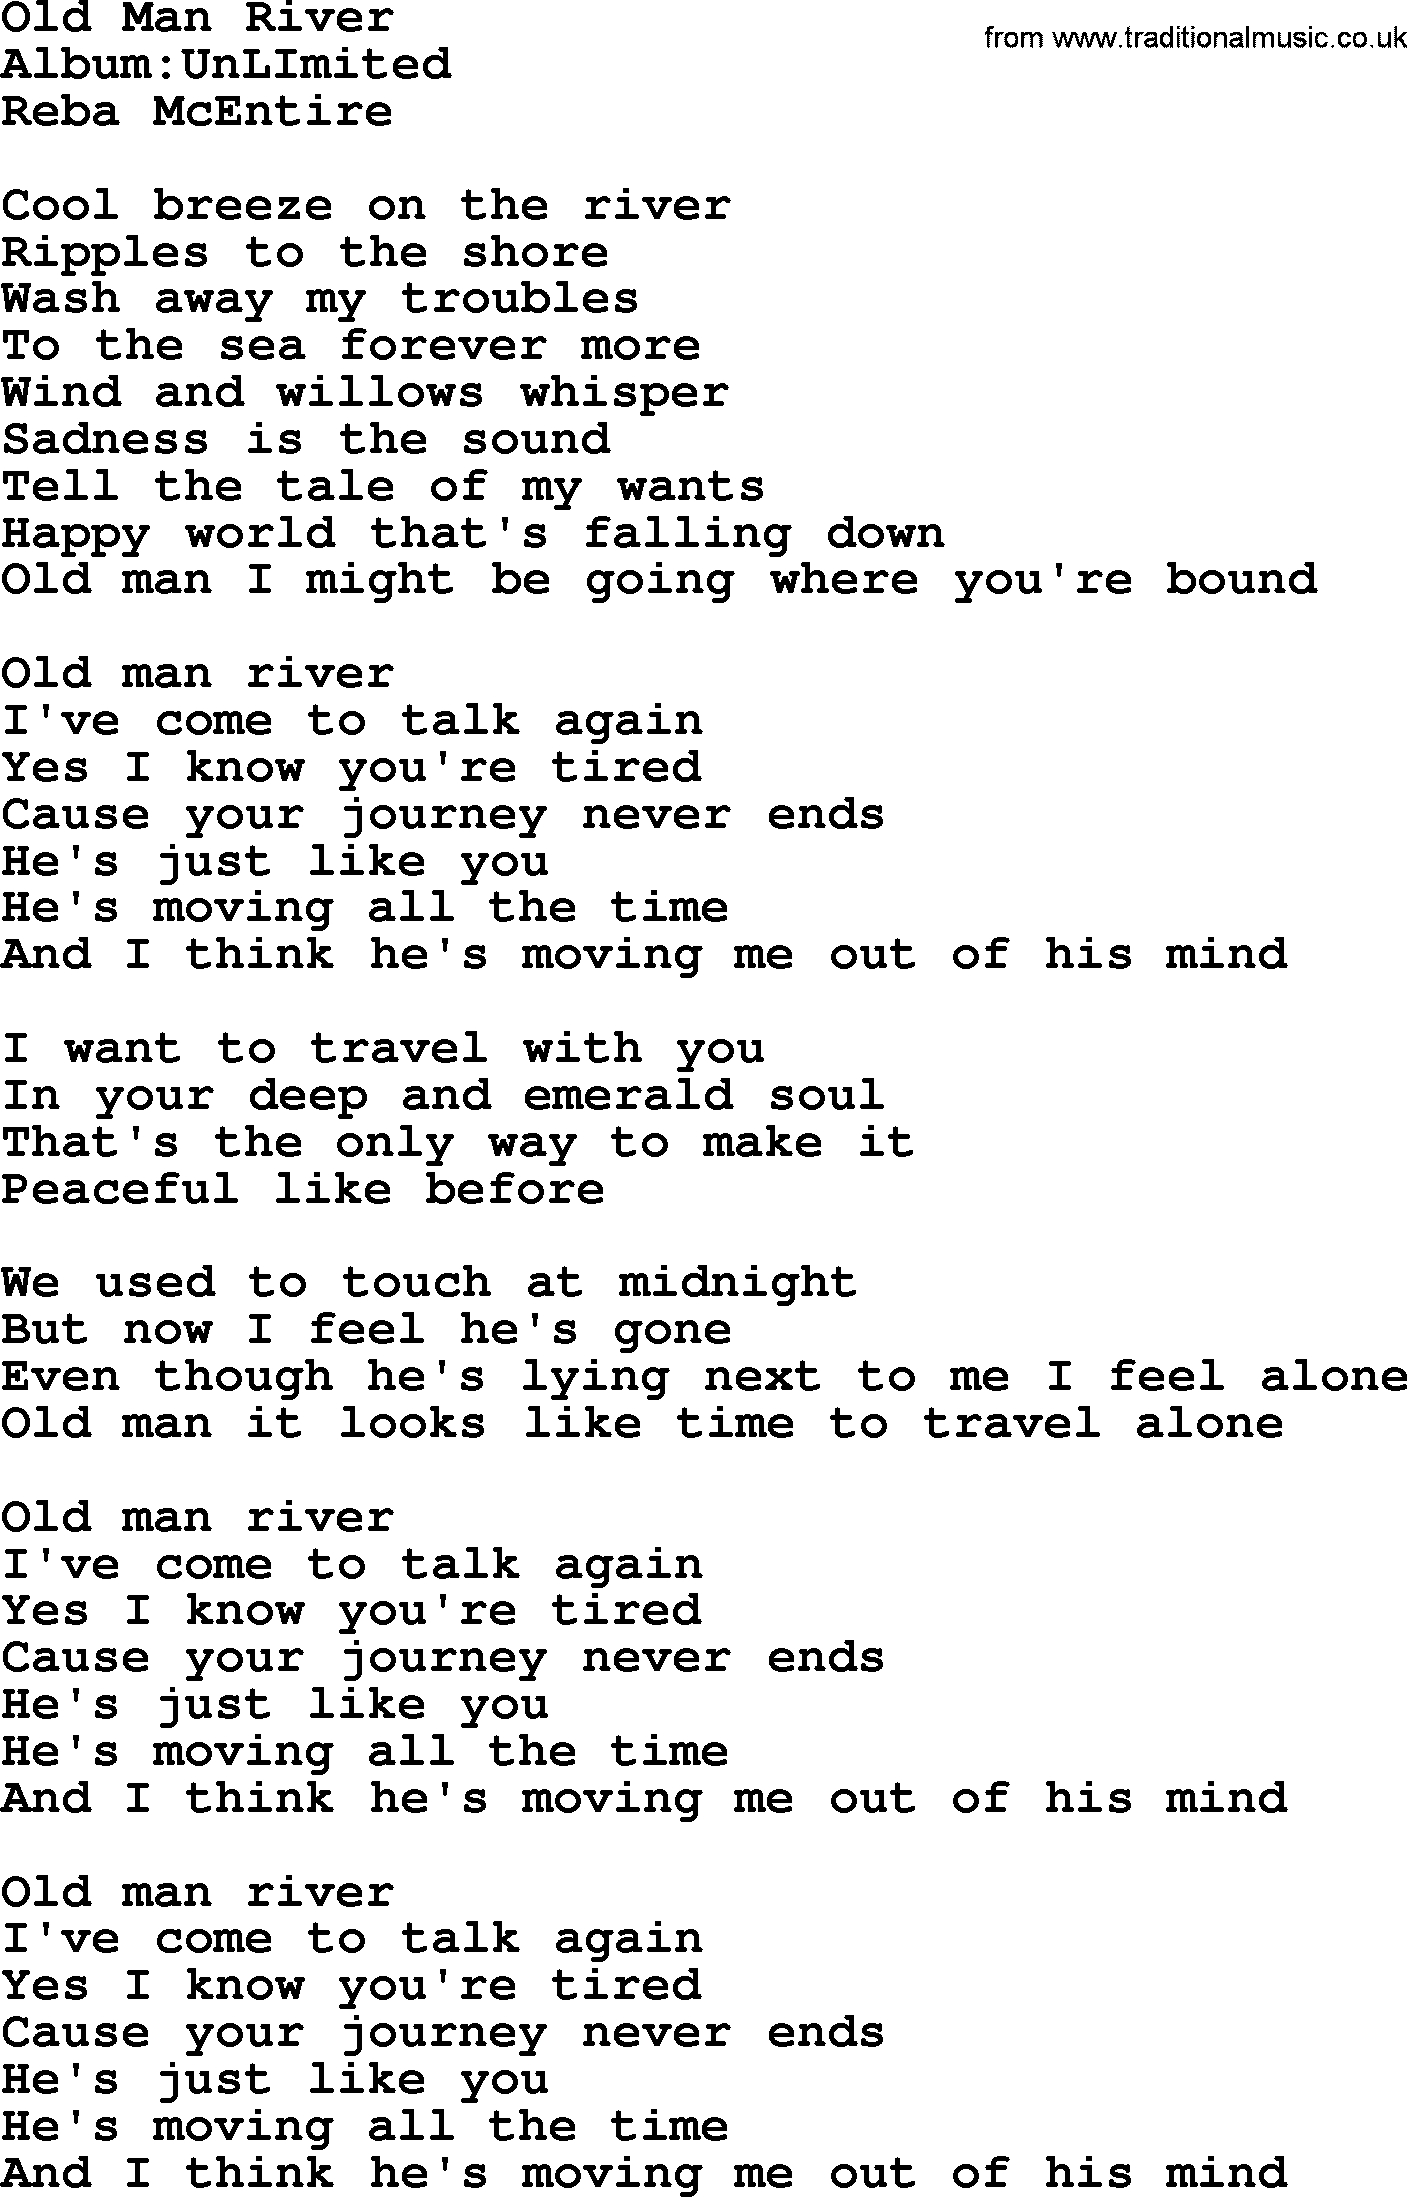 Reba McEntire song: Old Man River lyrics